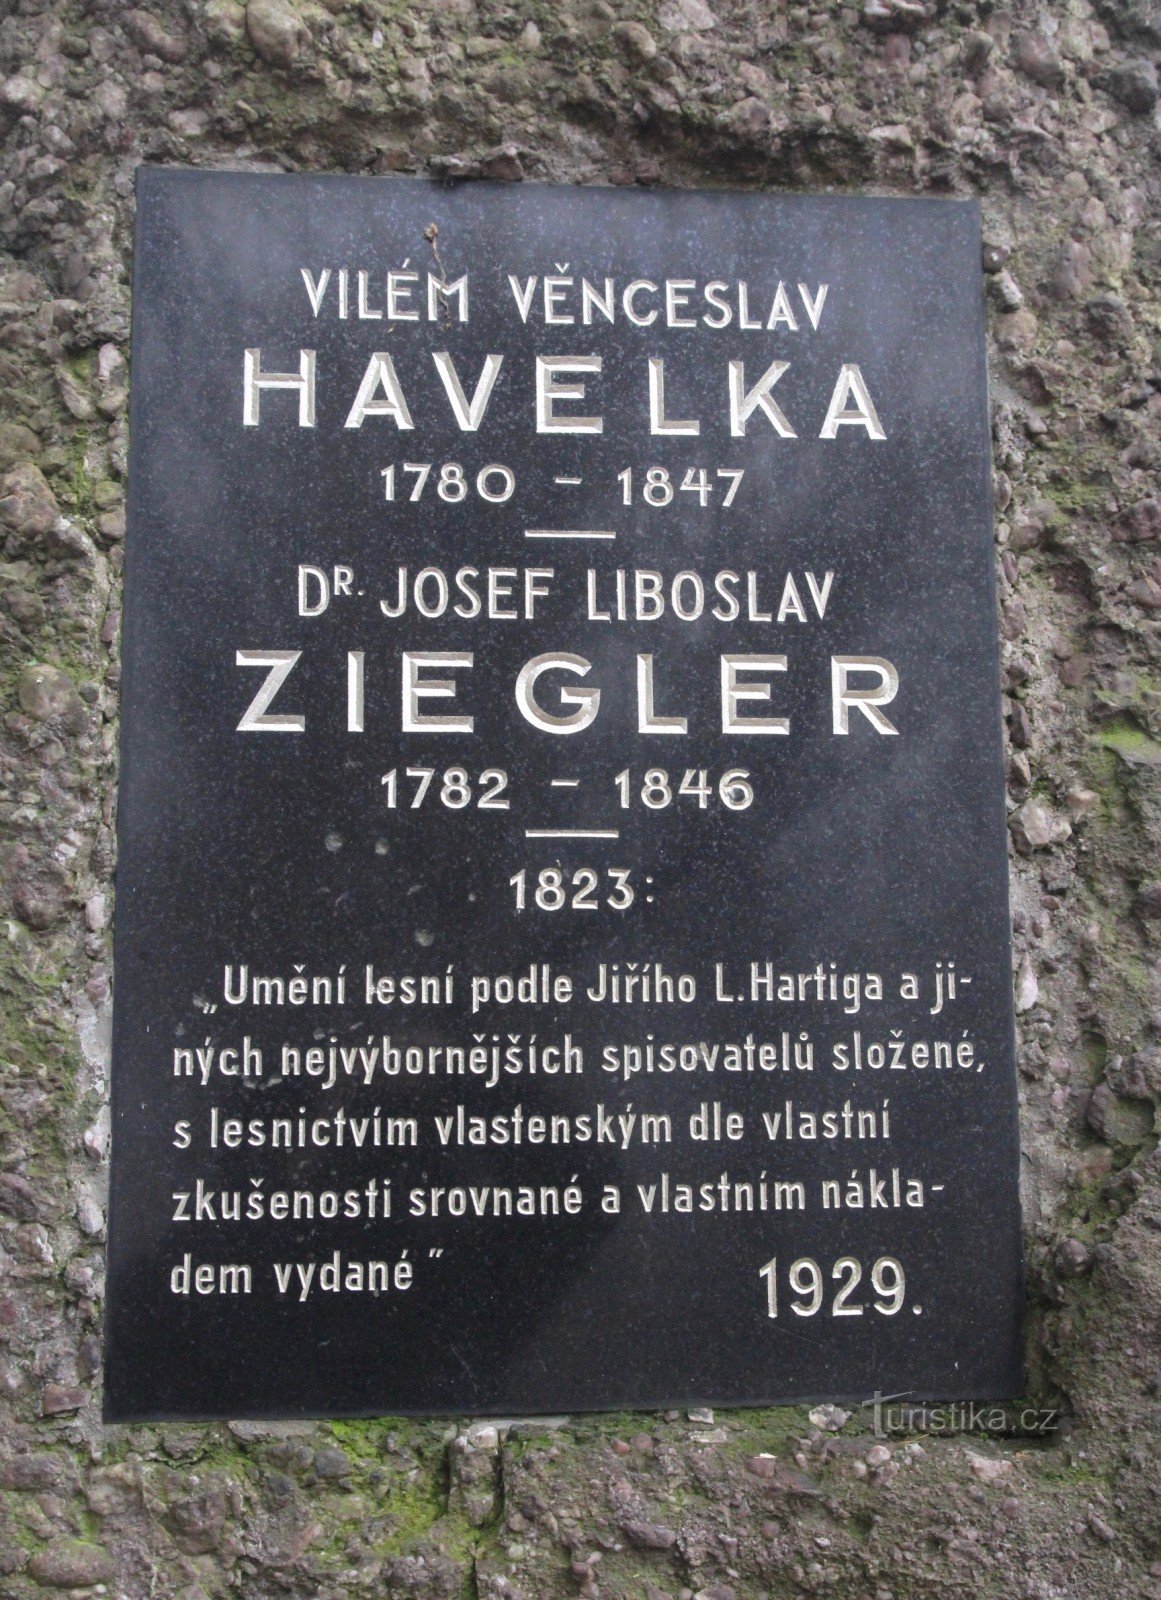 Spomenik VV Havelki i JL Ziegleru